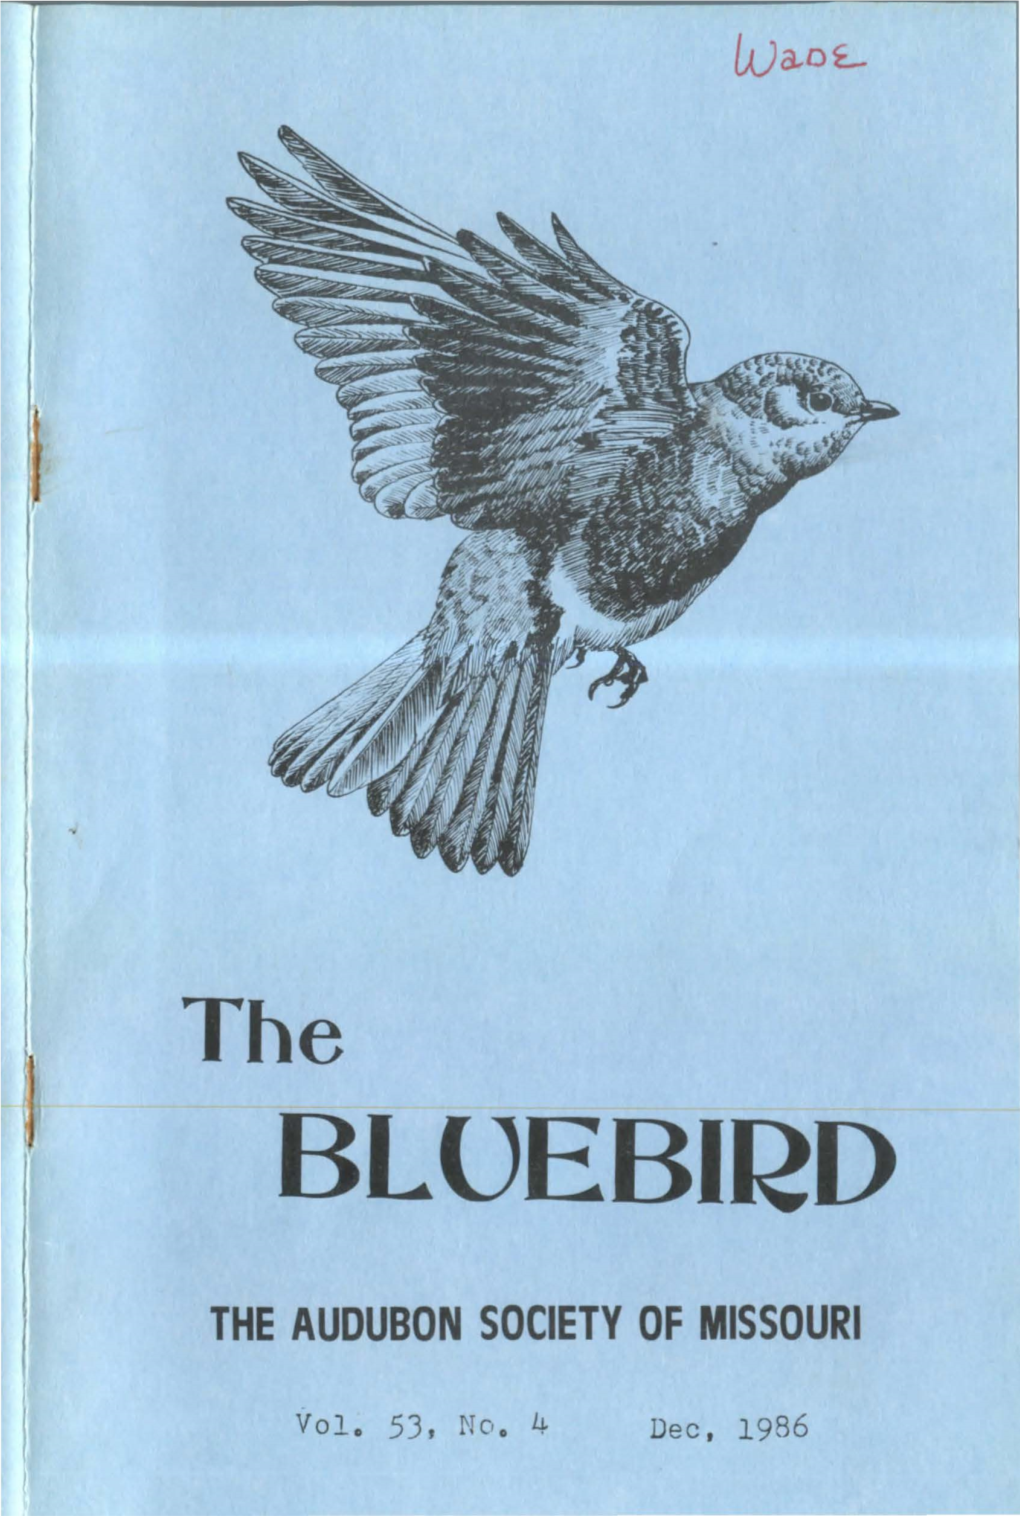 Dec, 1986 the Audubon Society of Missouri Founded 1901